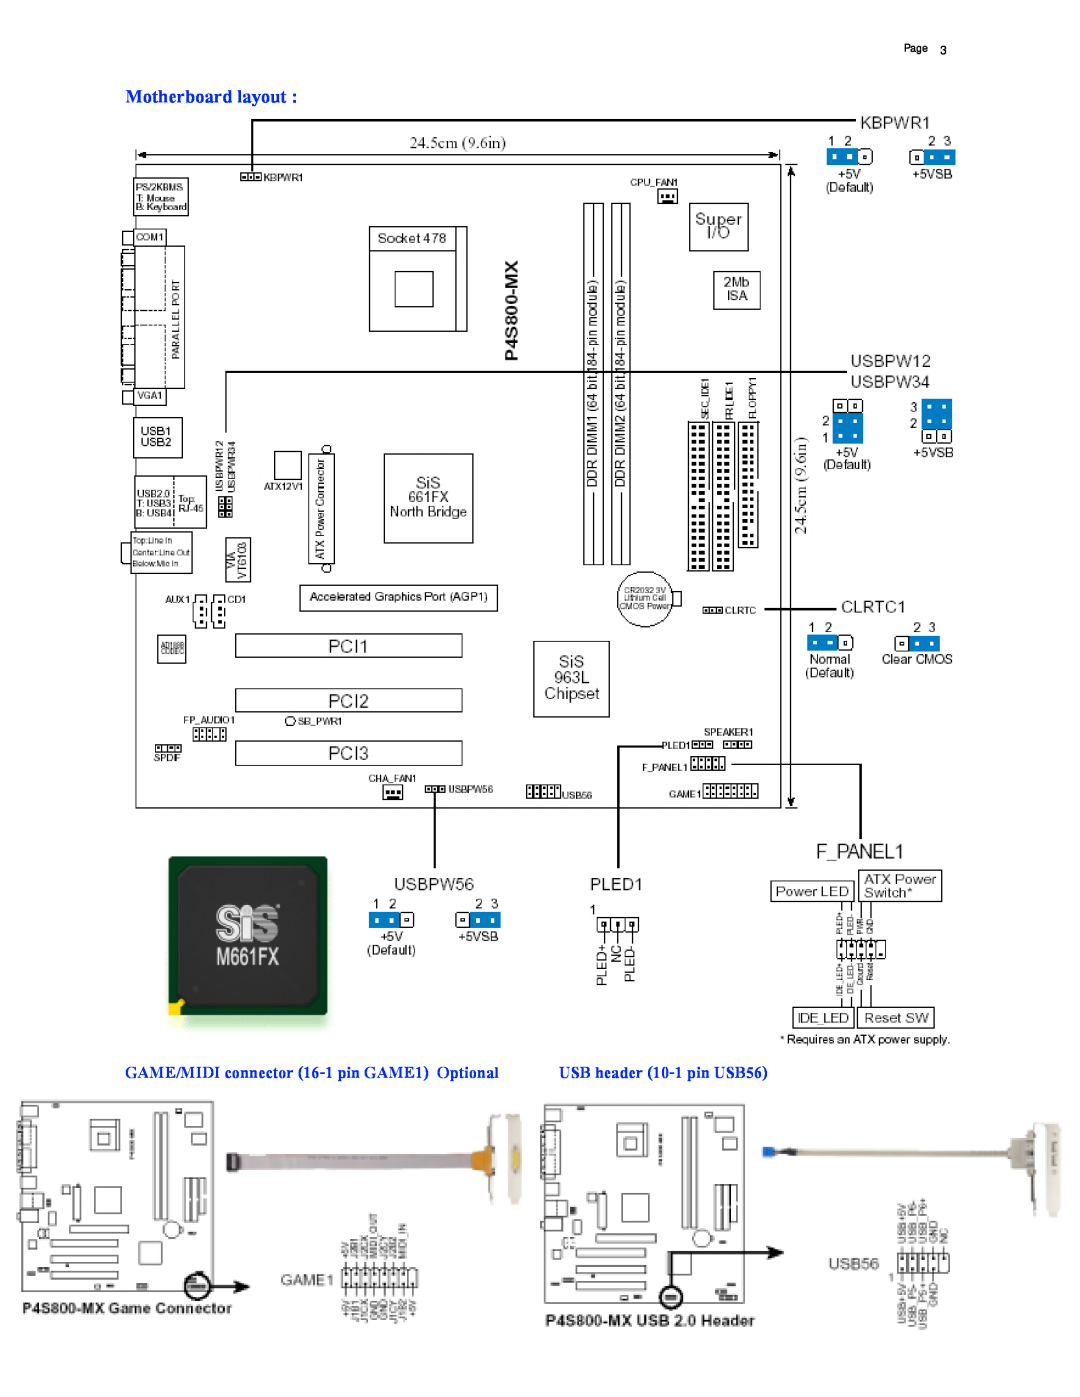 Asus P4S800-MX manual Motherboard layout, GAME/MIDI connector 16-1 pin GAME1 Optional, Page, USB header 10-1 pin USB56 